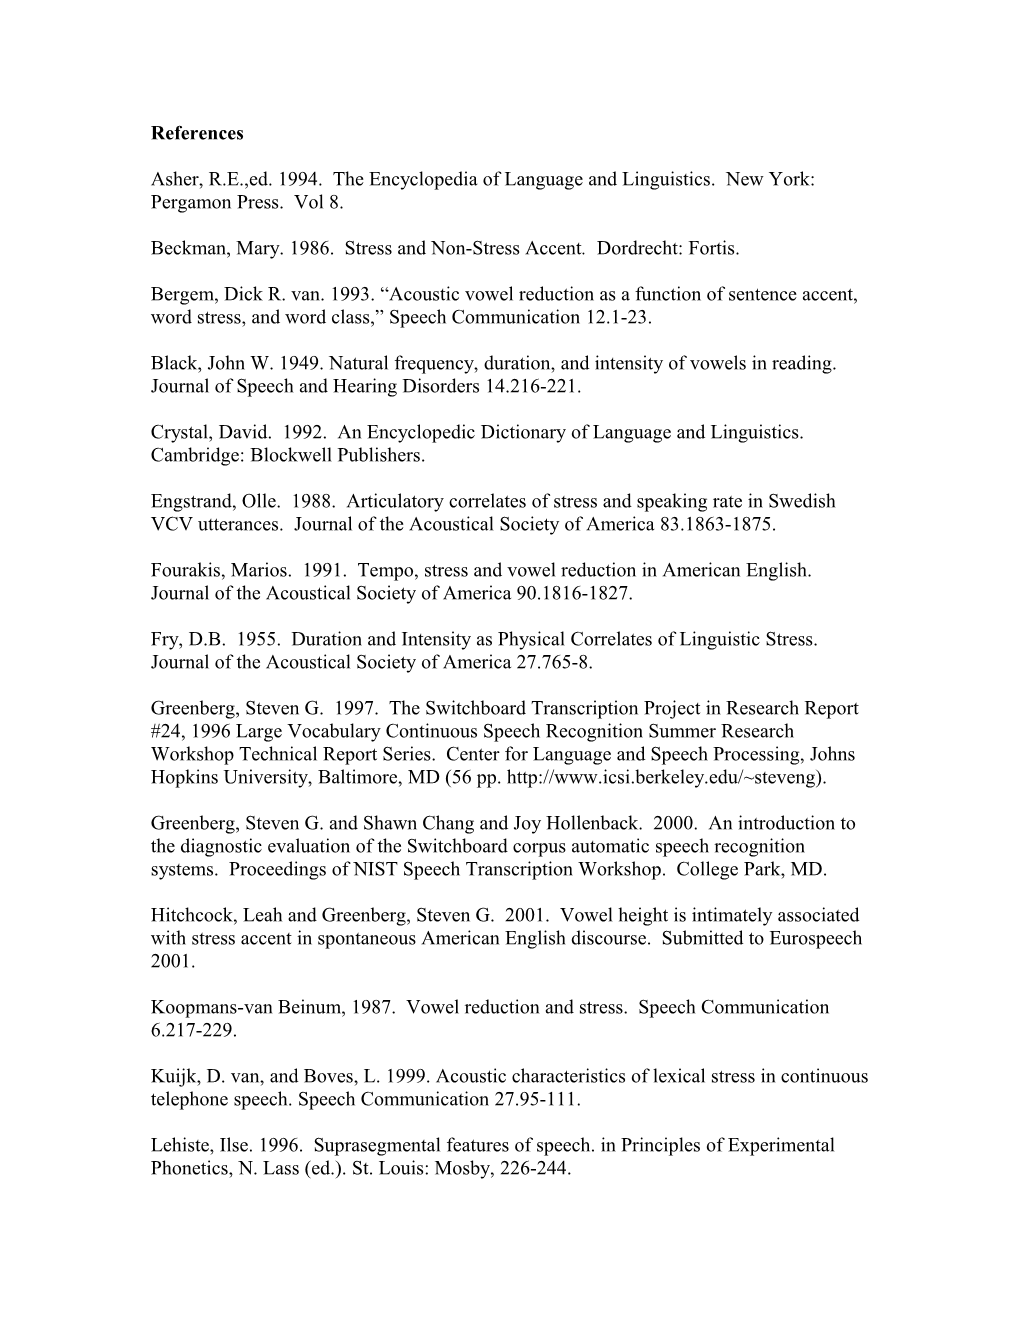 Asher, R.E.,Ed. 1994. the Encyclopedia of Language and Linguistics. New York: Pergamon